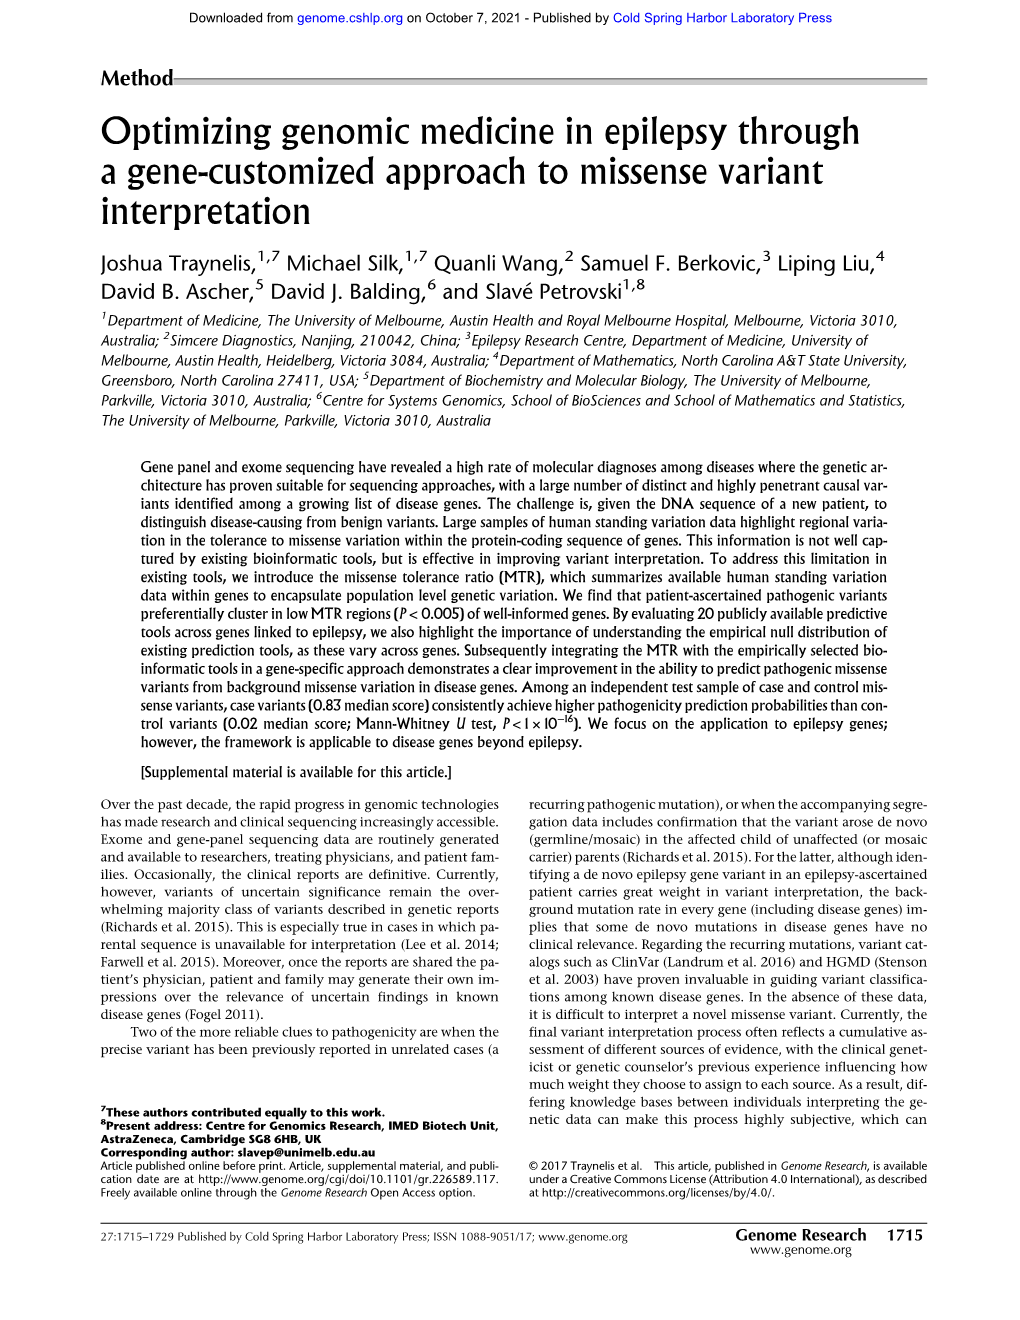 Optimizing Genomic Medicine in Epilepsy Through a Gene-Customized Approach to Missense Variant Interpretation